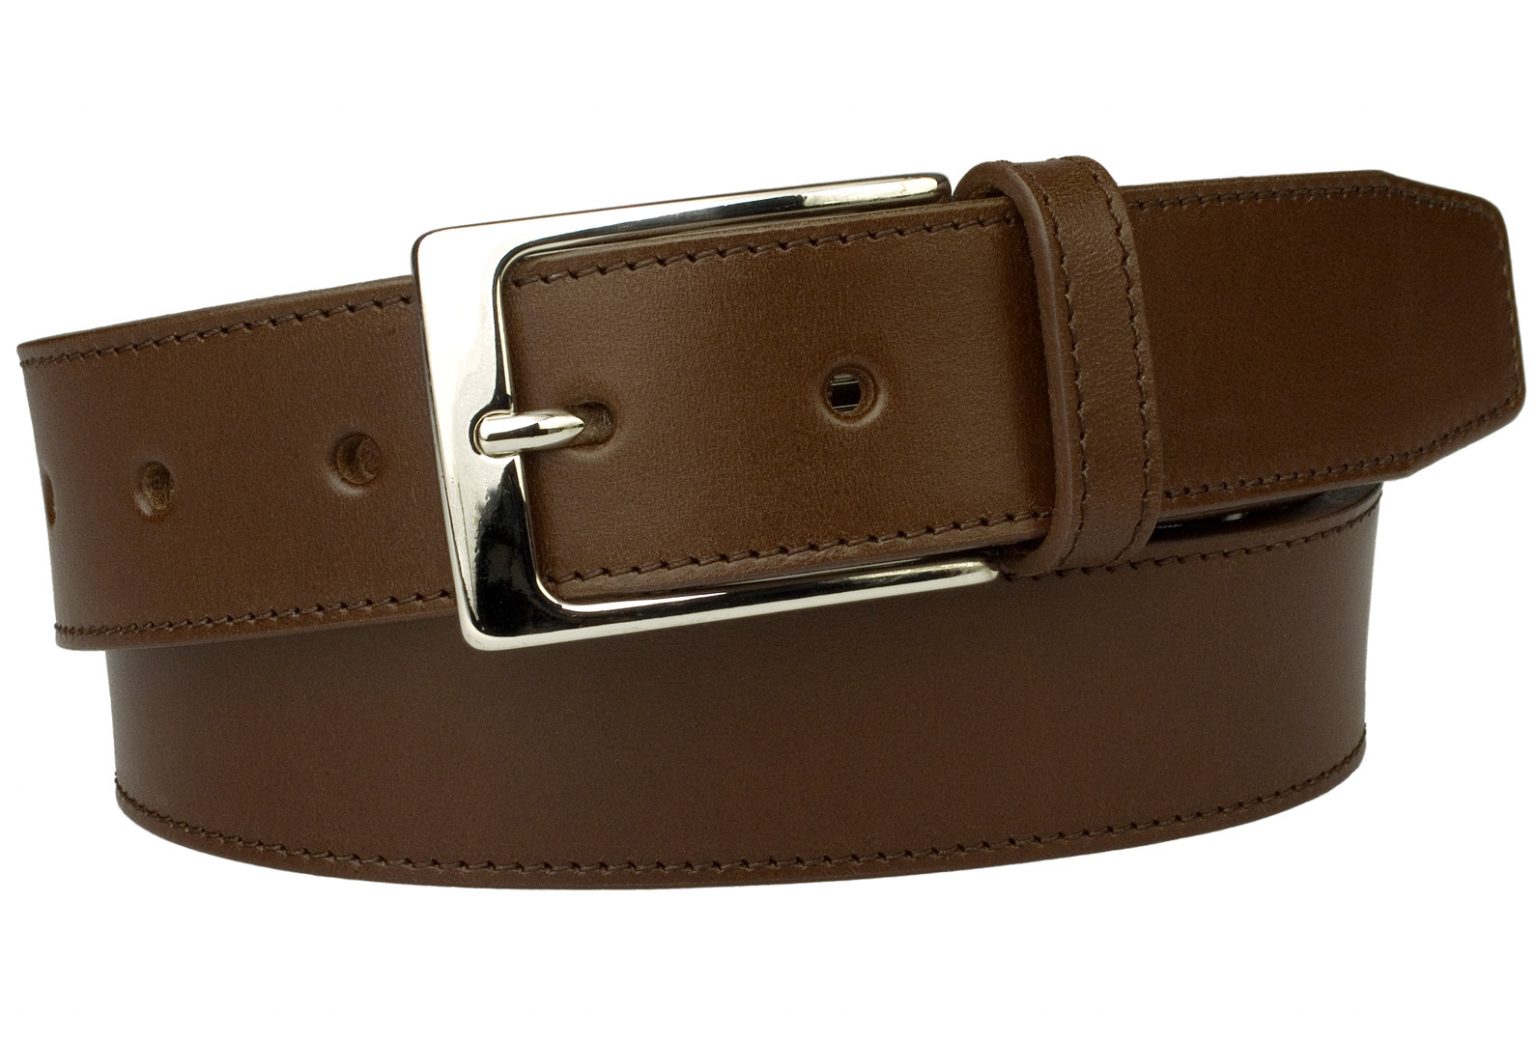 British Stitched Edge Brown Leather Suit Belt 3.5 cm Wide - Belt Designs